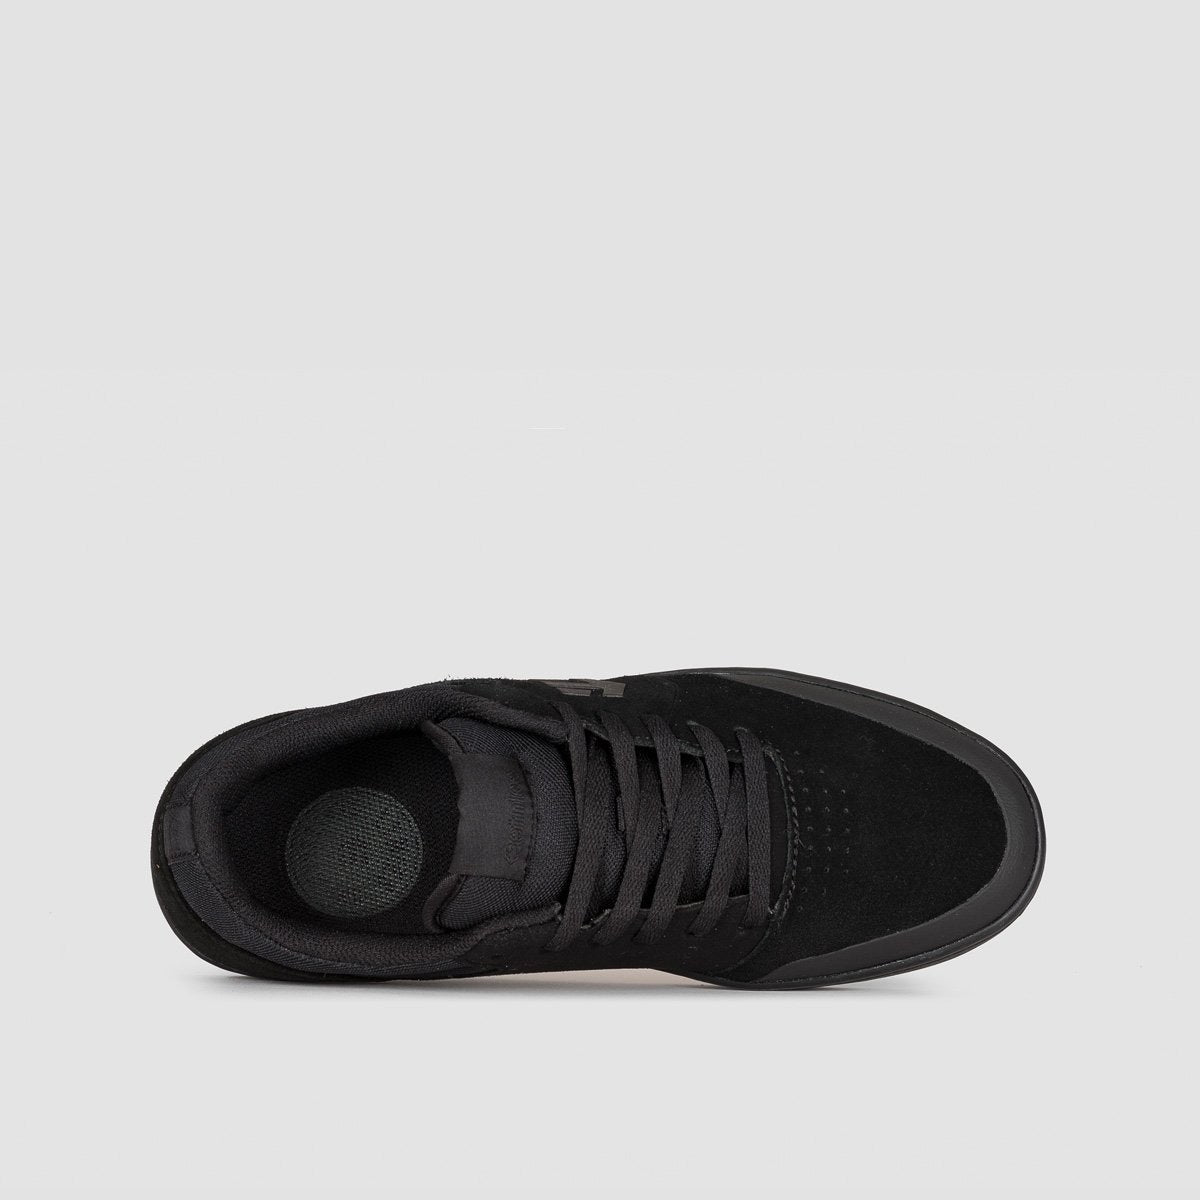 Etnies Marana Black/Black/Black - Footwear